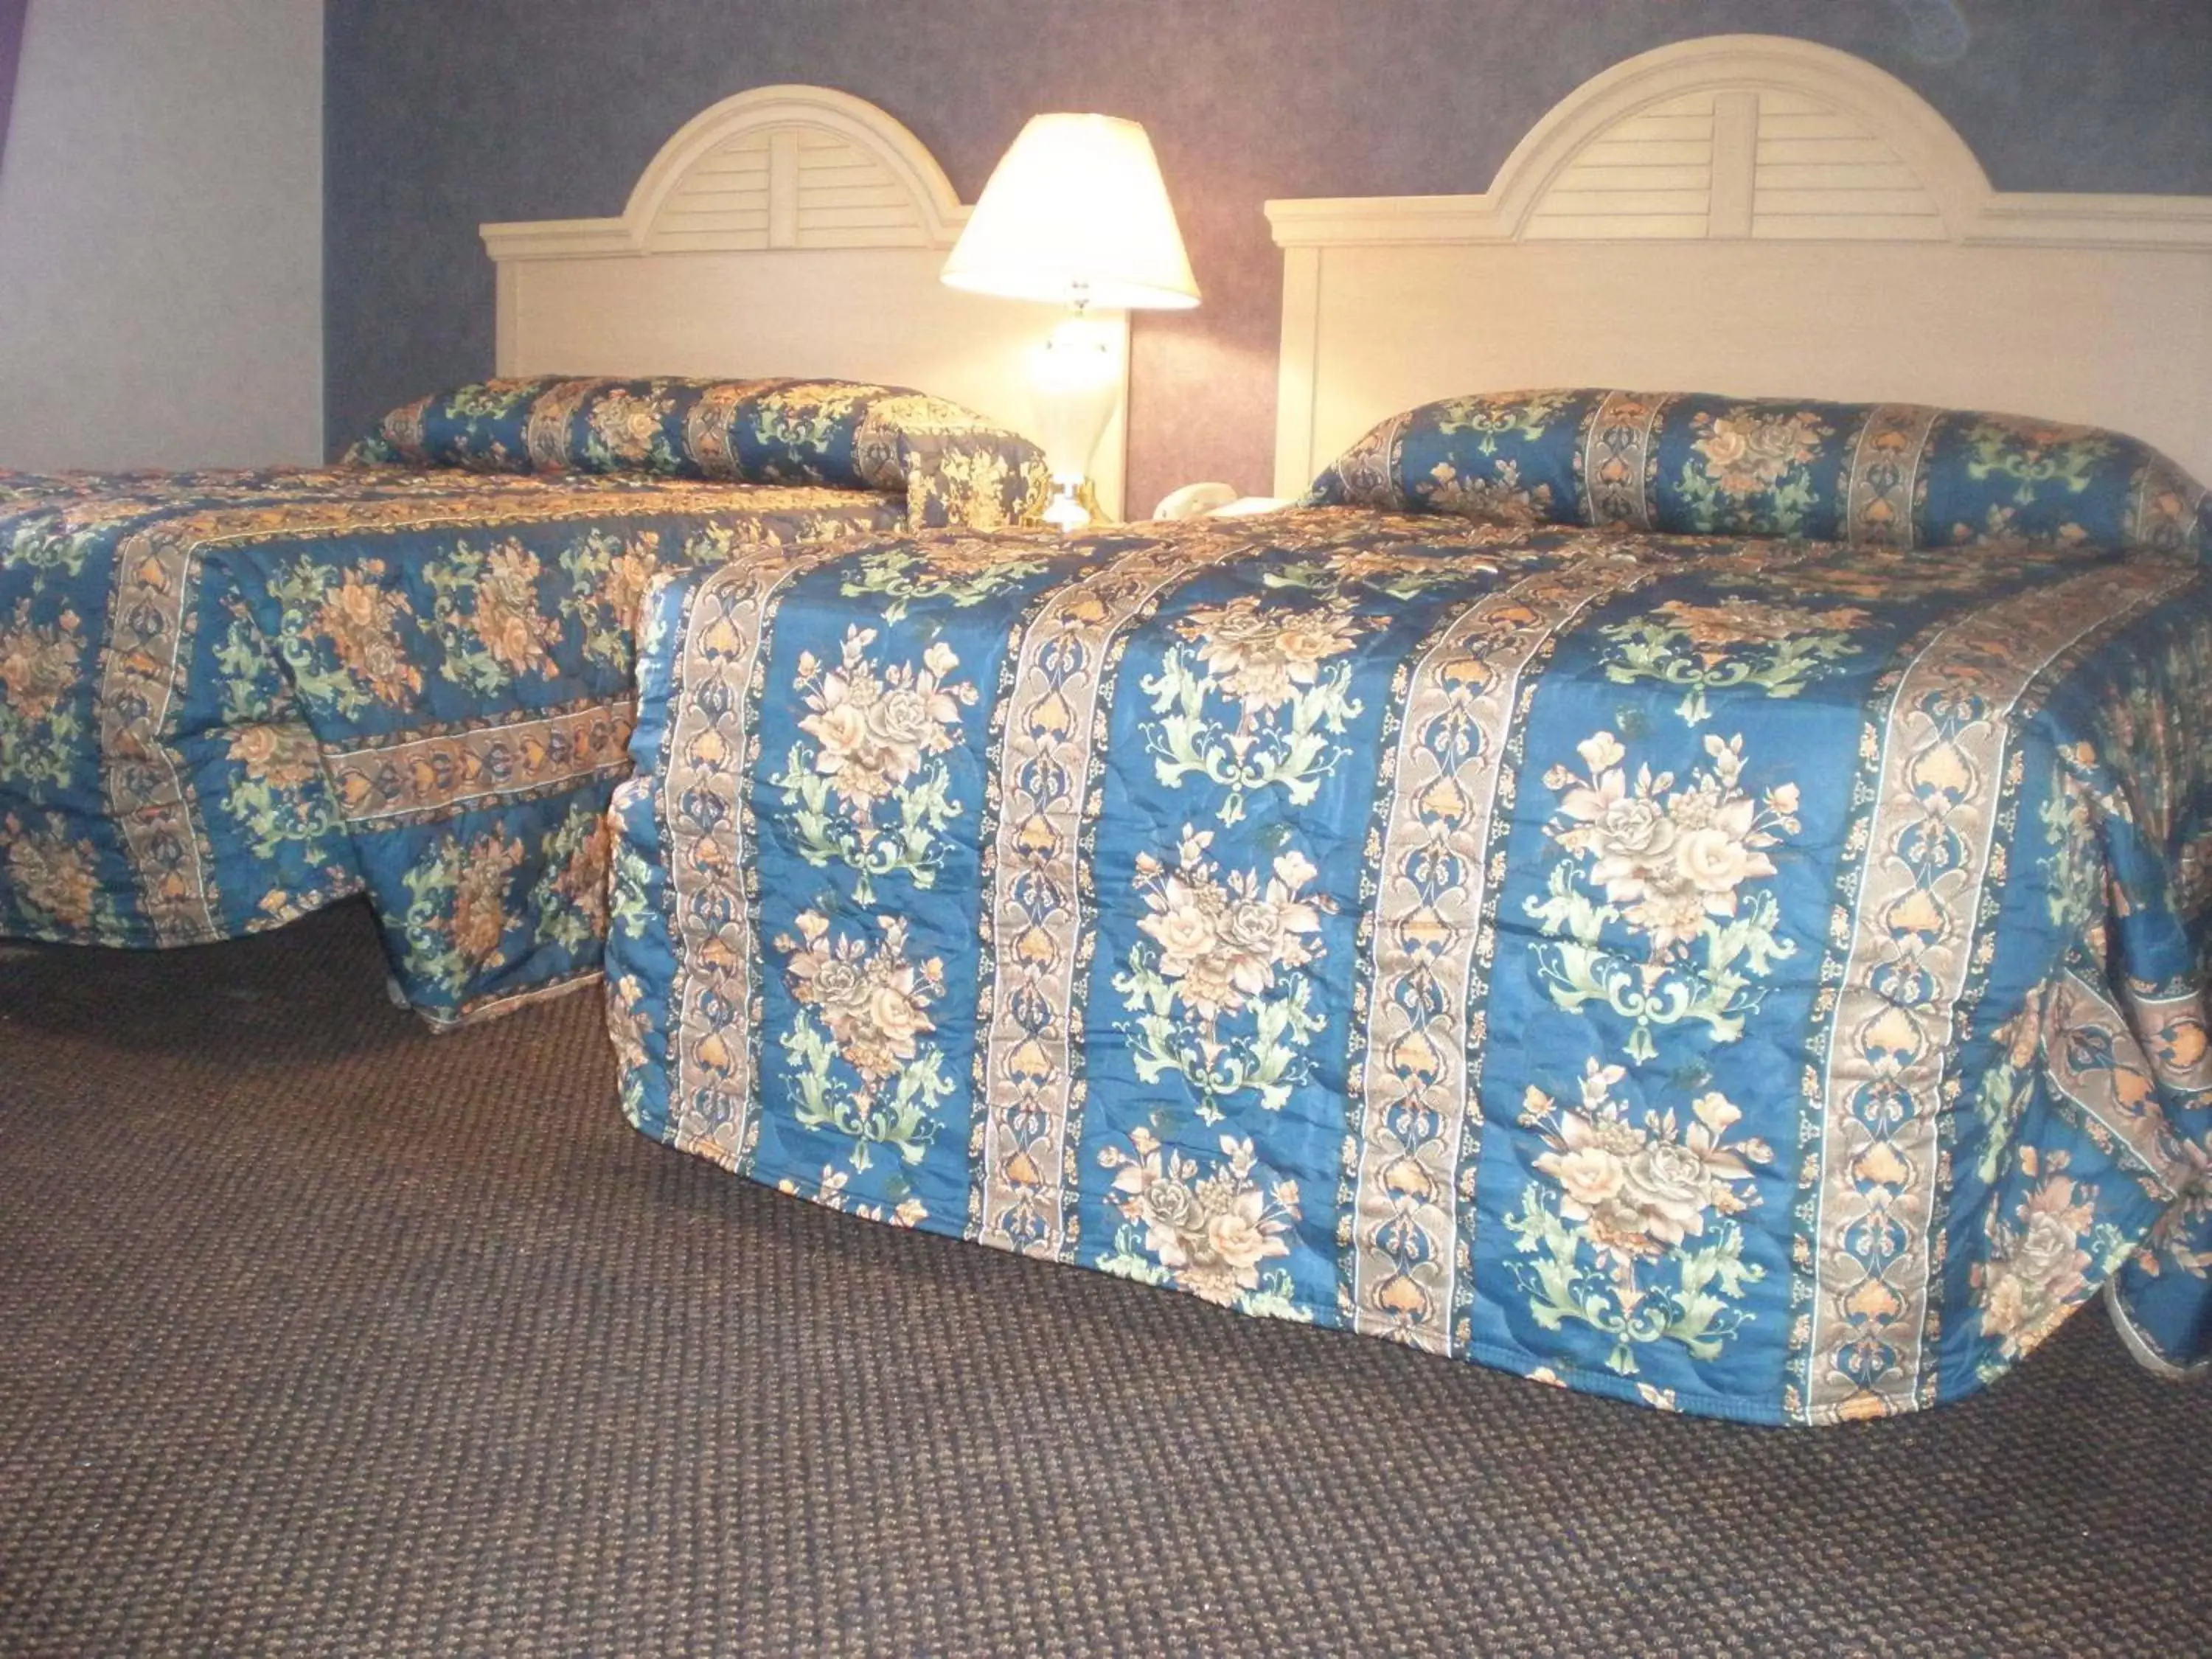 Bed in Village Inn & Suites - Smithville